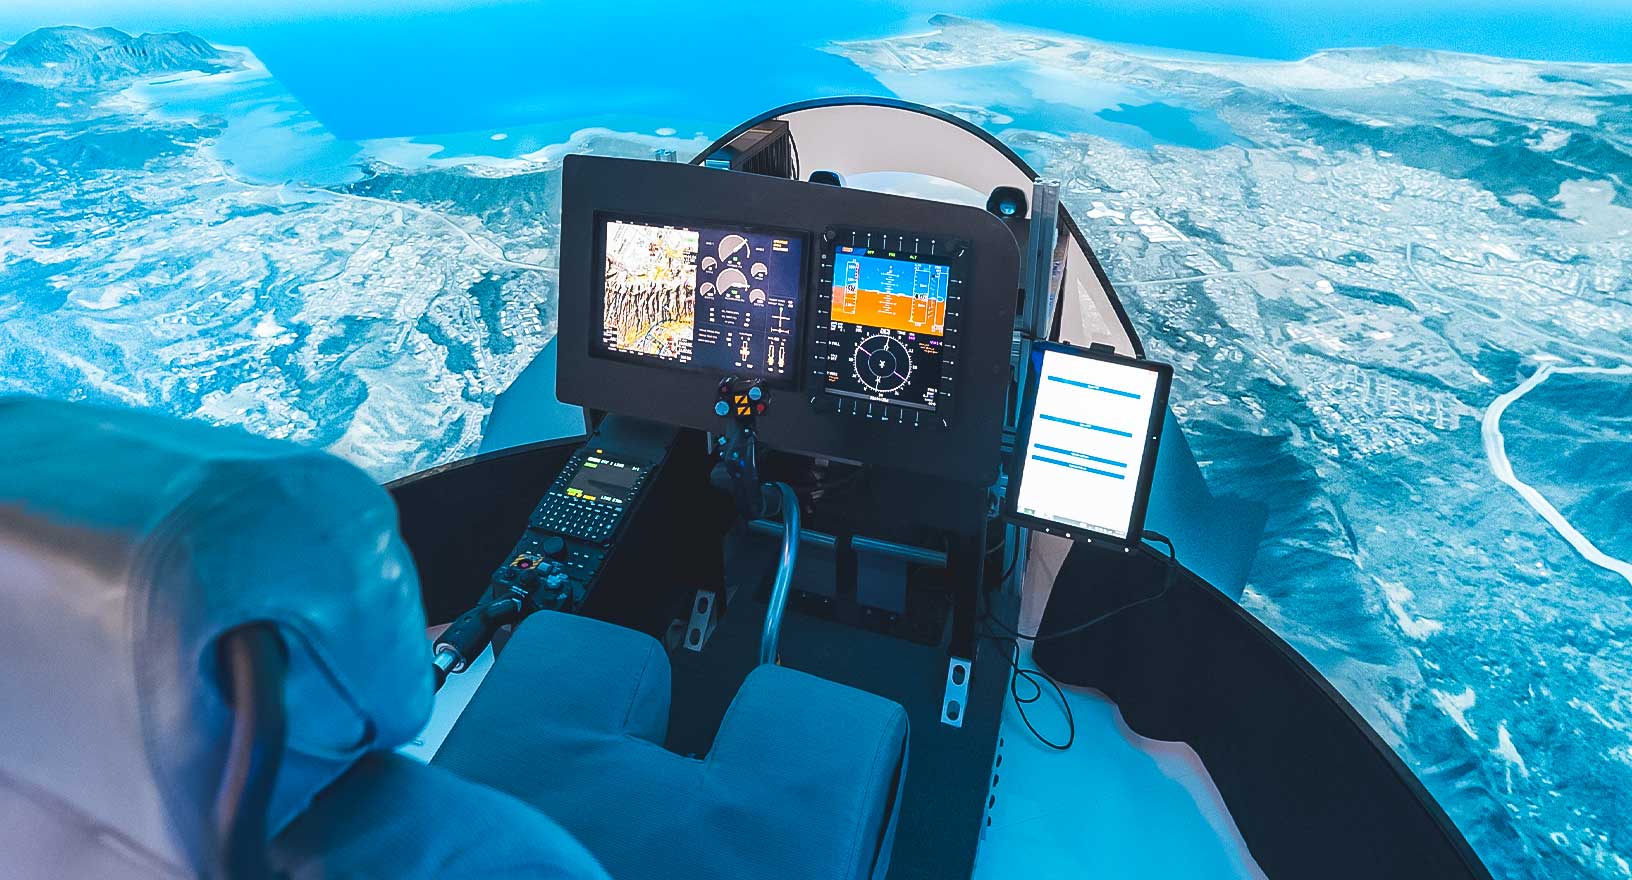 flight simulator running a sequence